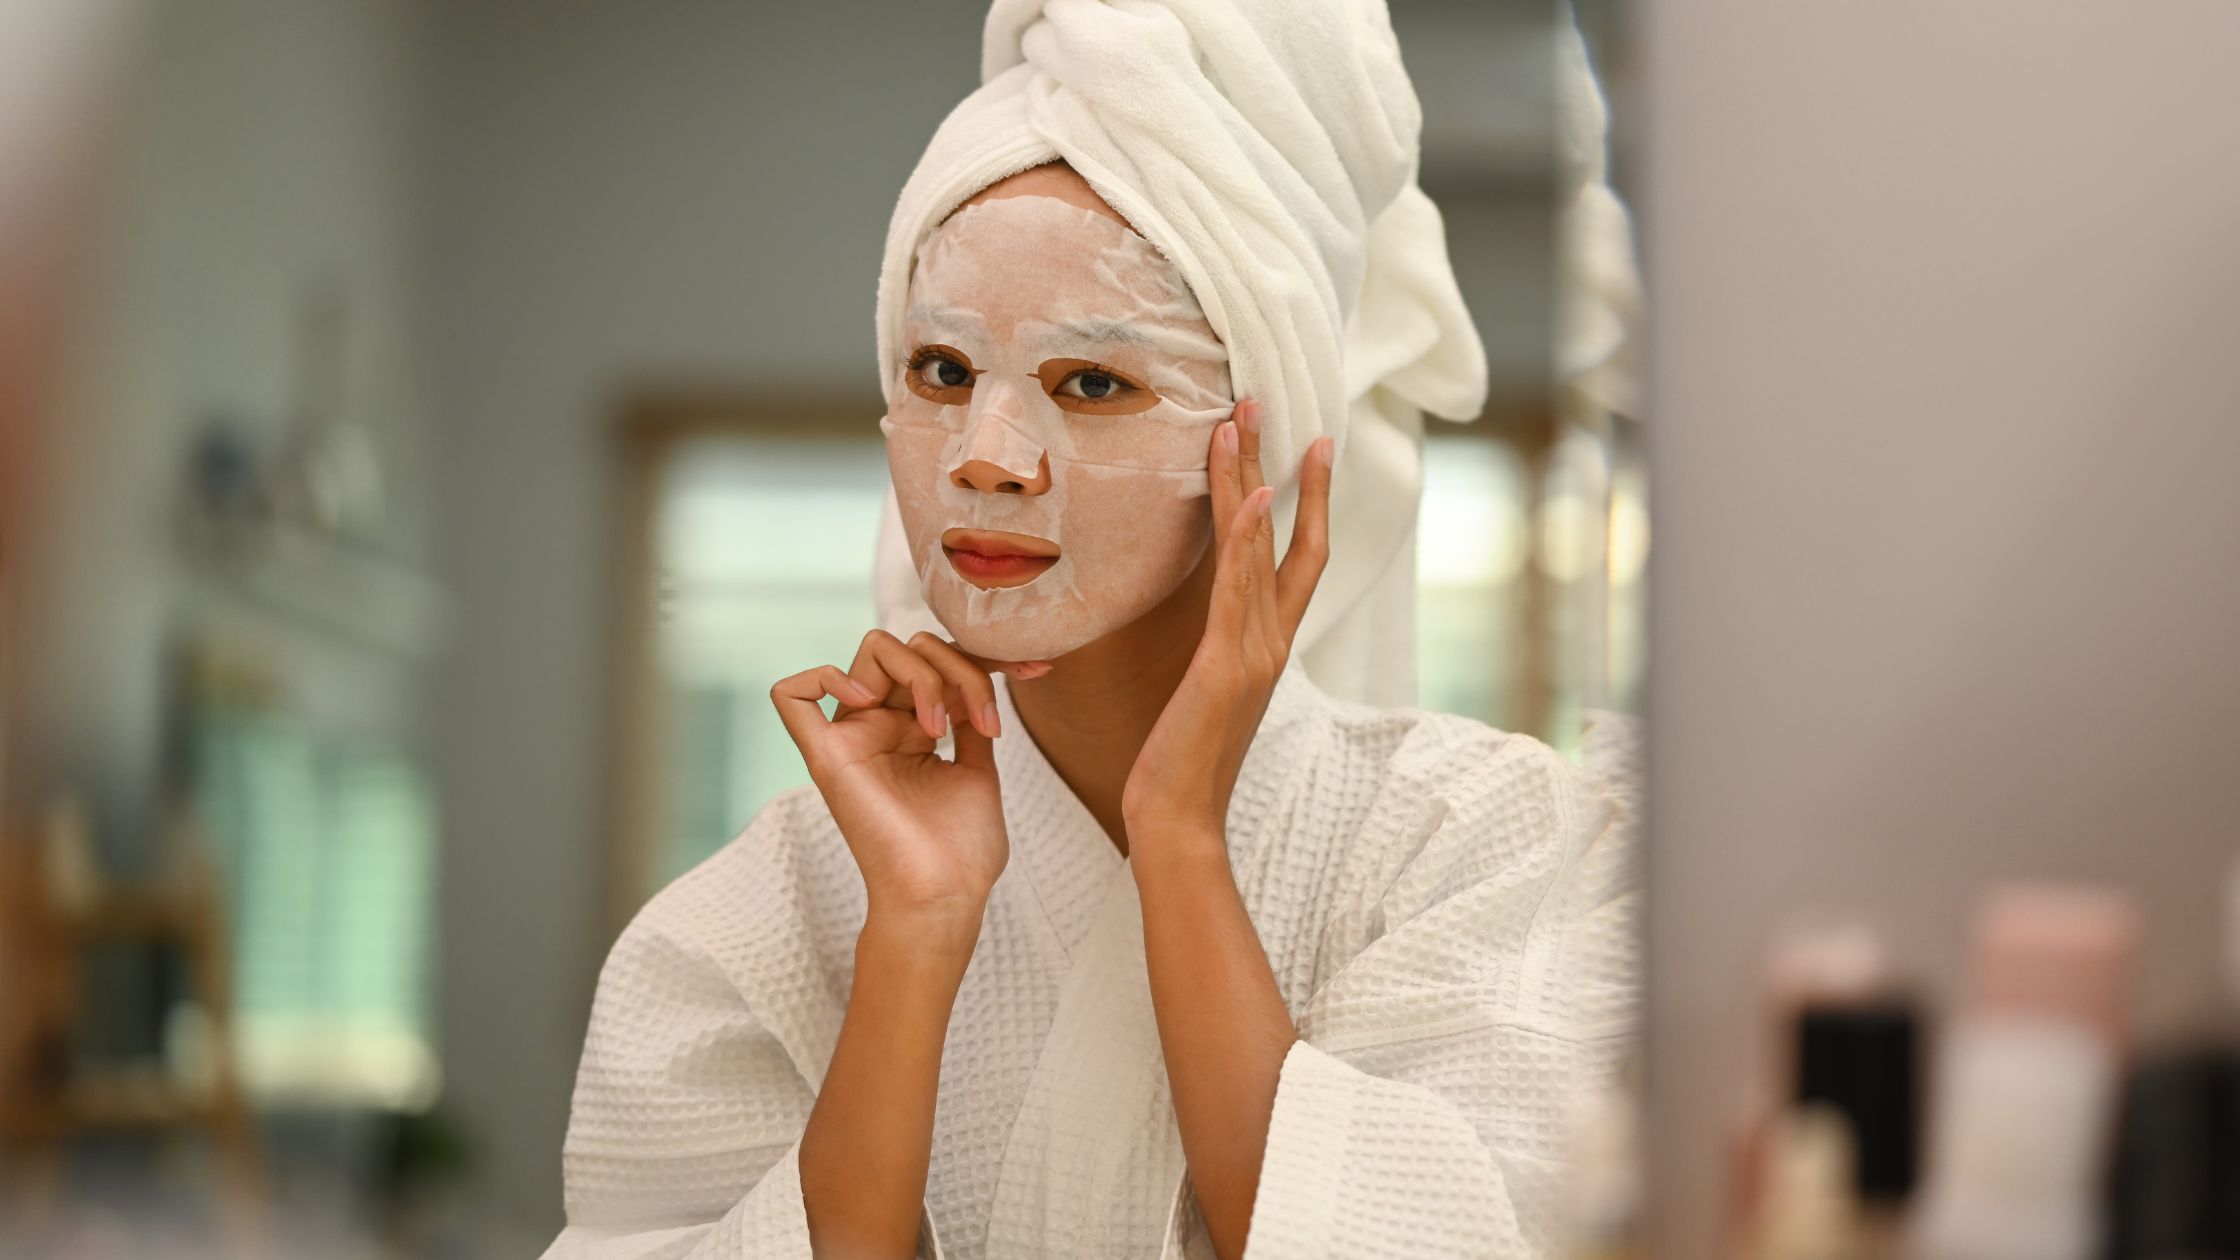 La Maschera giorno idratante anti-aging Dermafutura è adatta a tutti i tipi di pelle.
